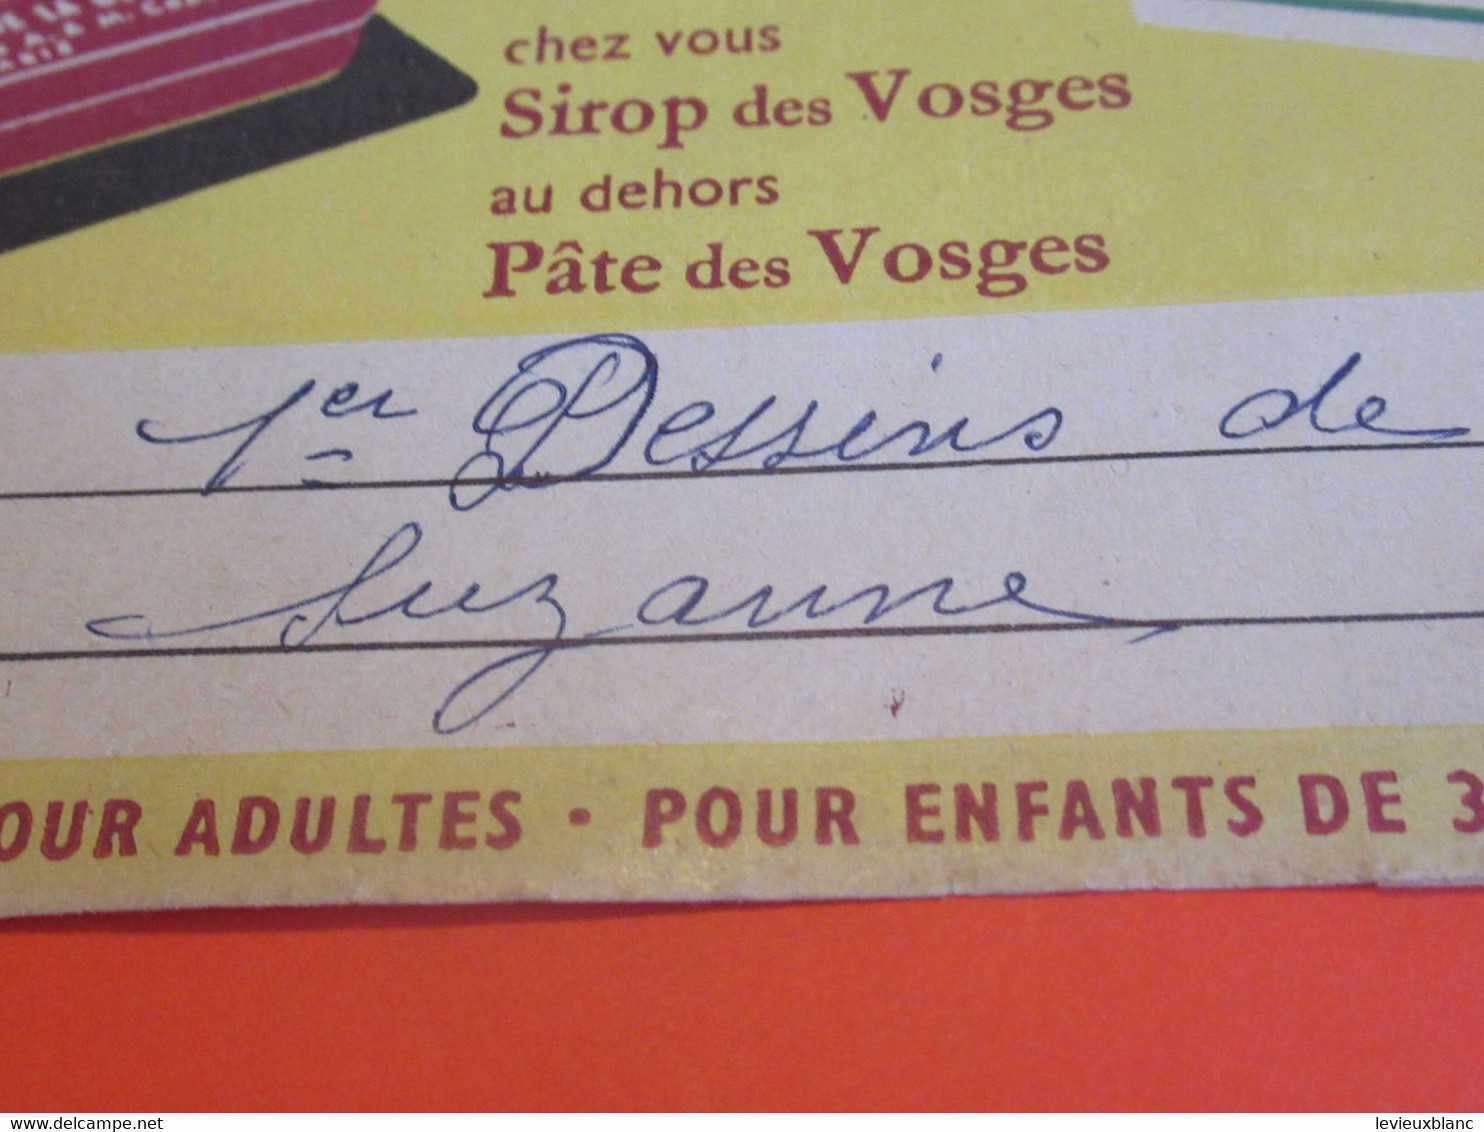 Protège-Cahier/Pharmacie/SIROP Des VOSGES CAZE /Fini Mon Gros Rhume/Vers 1950    CAH322 - Protège-cahiers